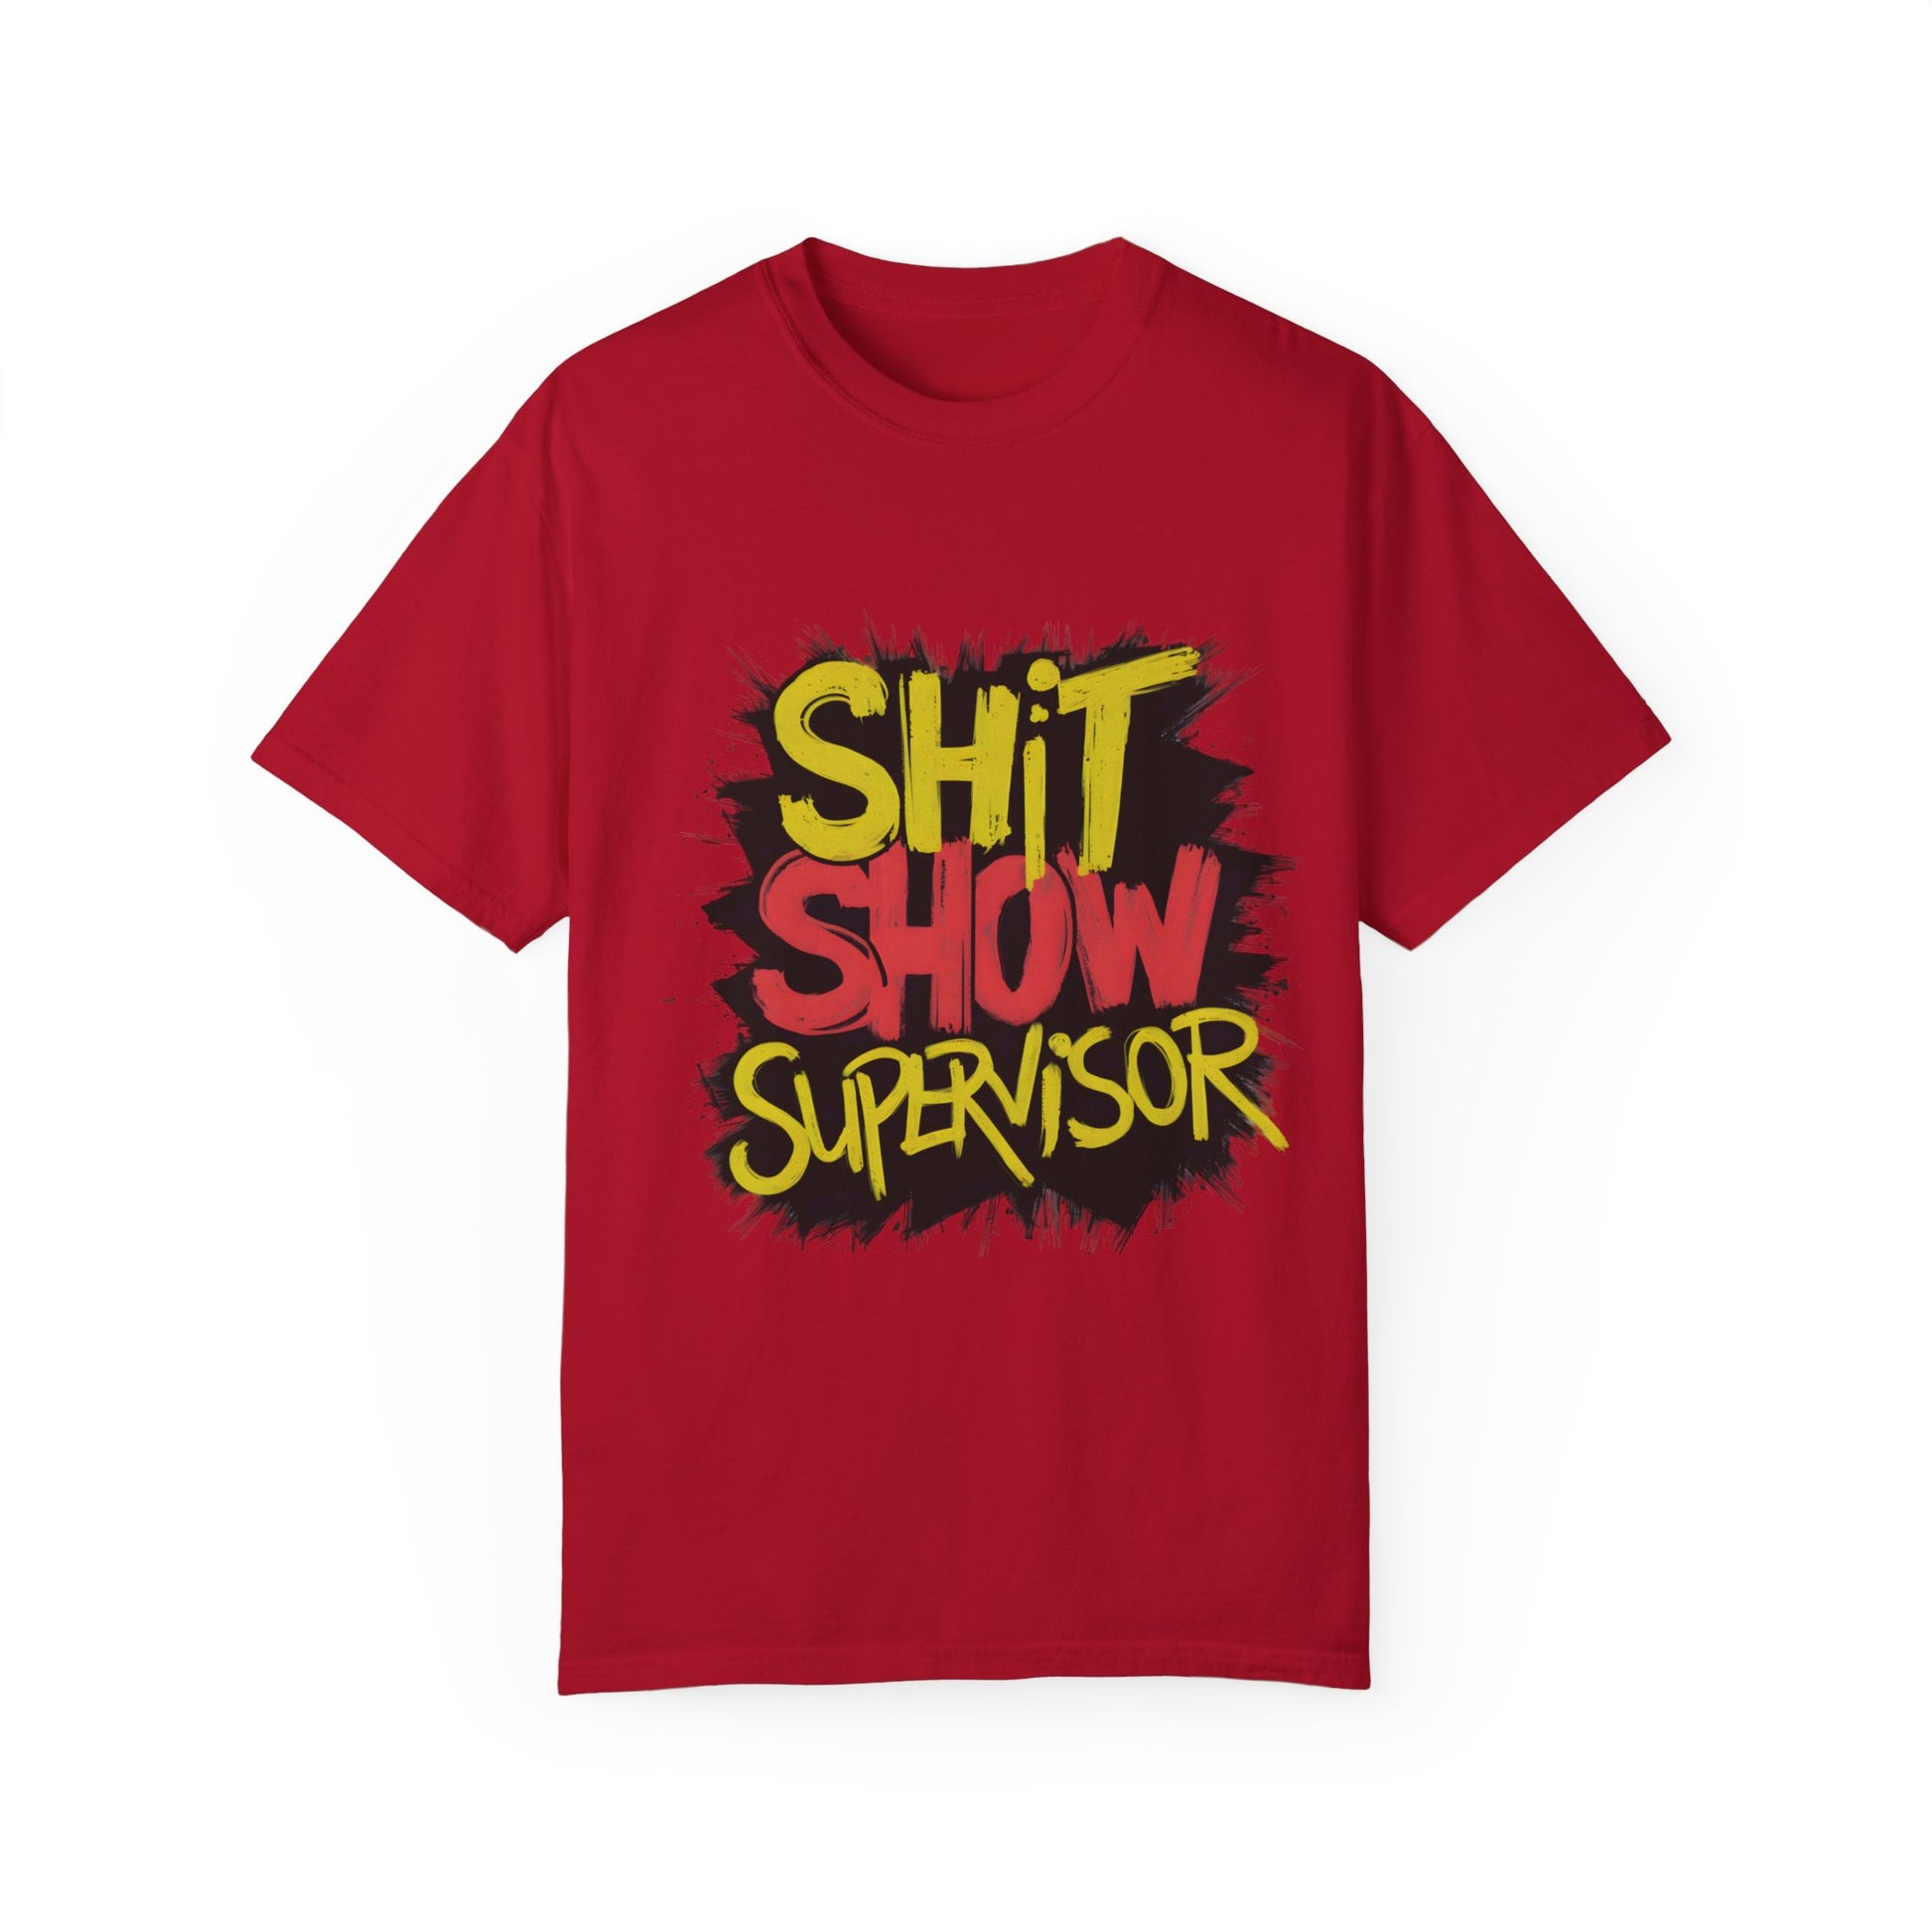 Shit Show Supervisor Urban Sarcastic Graphic Unisex Garment Dyed T-shirt Cotton Funny Humorous Graphic Soft Premium Unisex Men Women Red T-shirt Birthday Gift-2